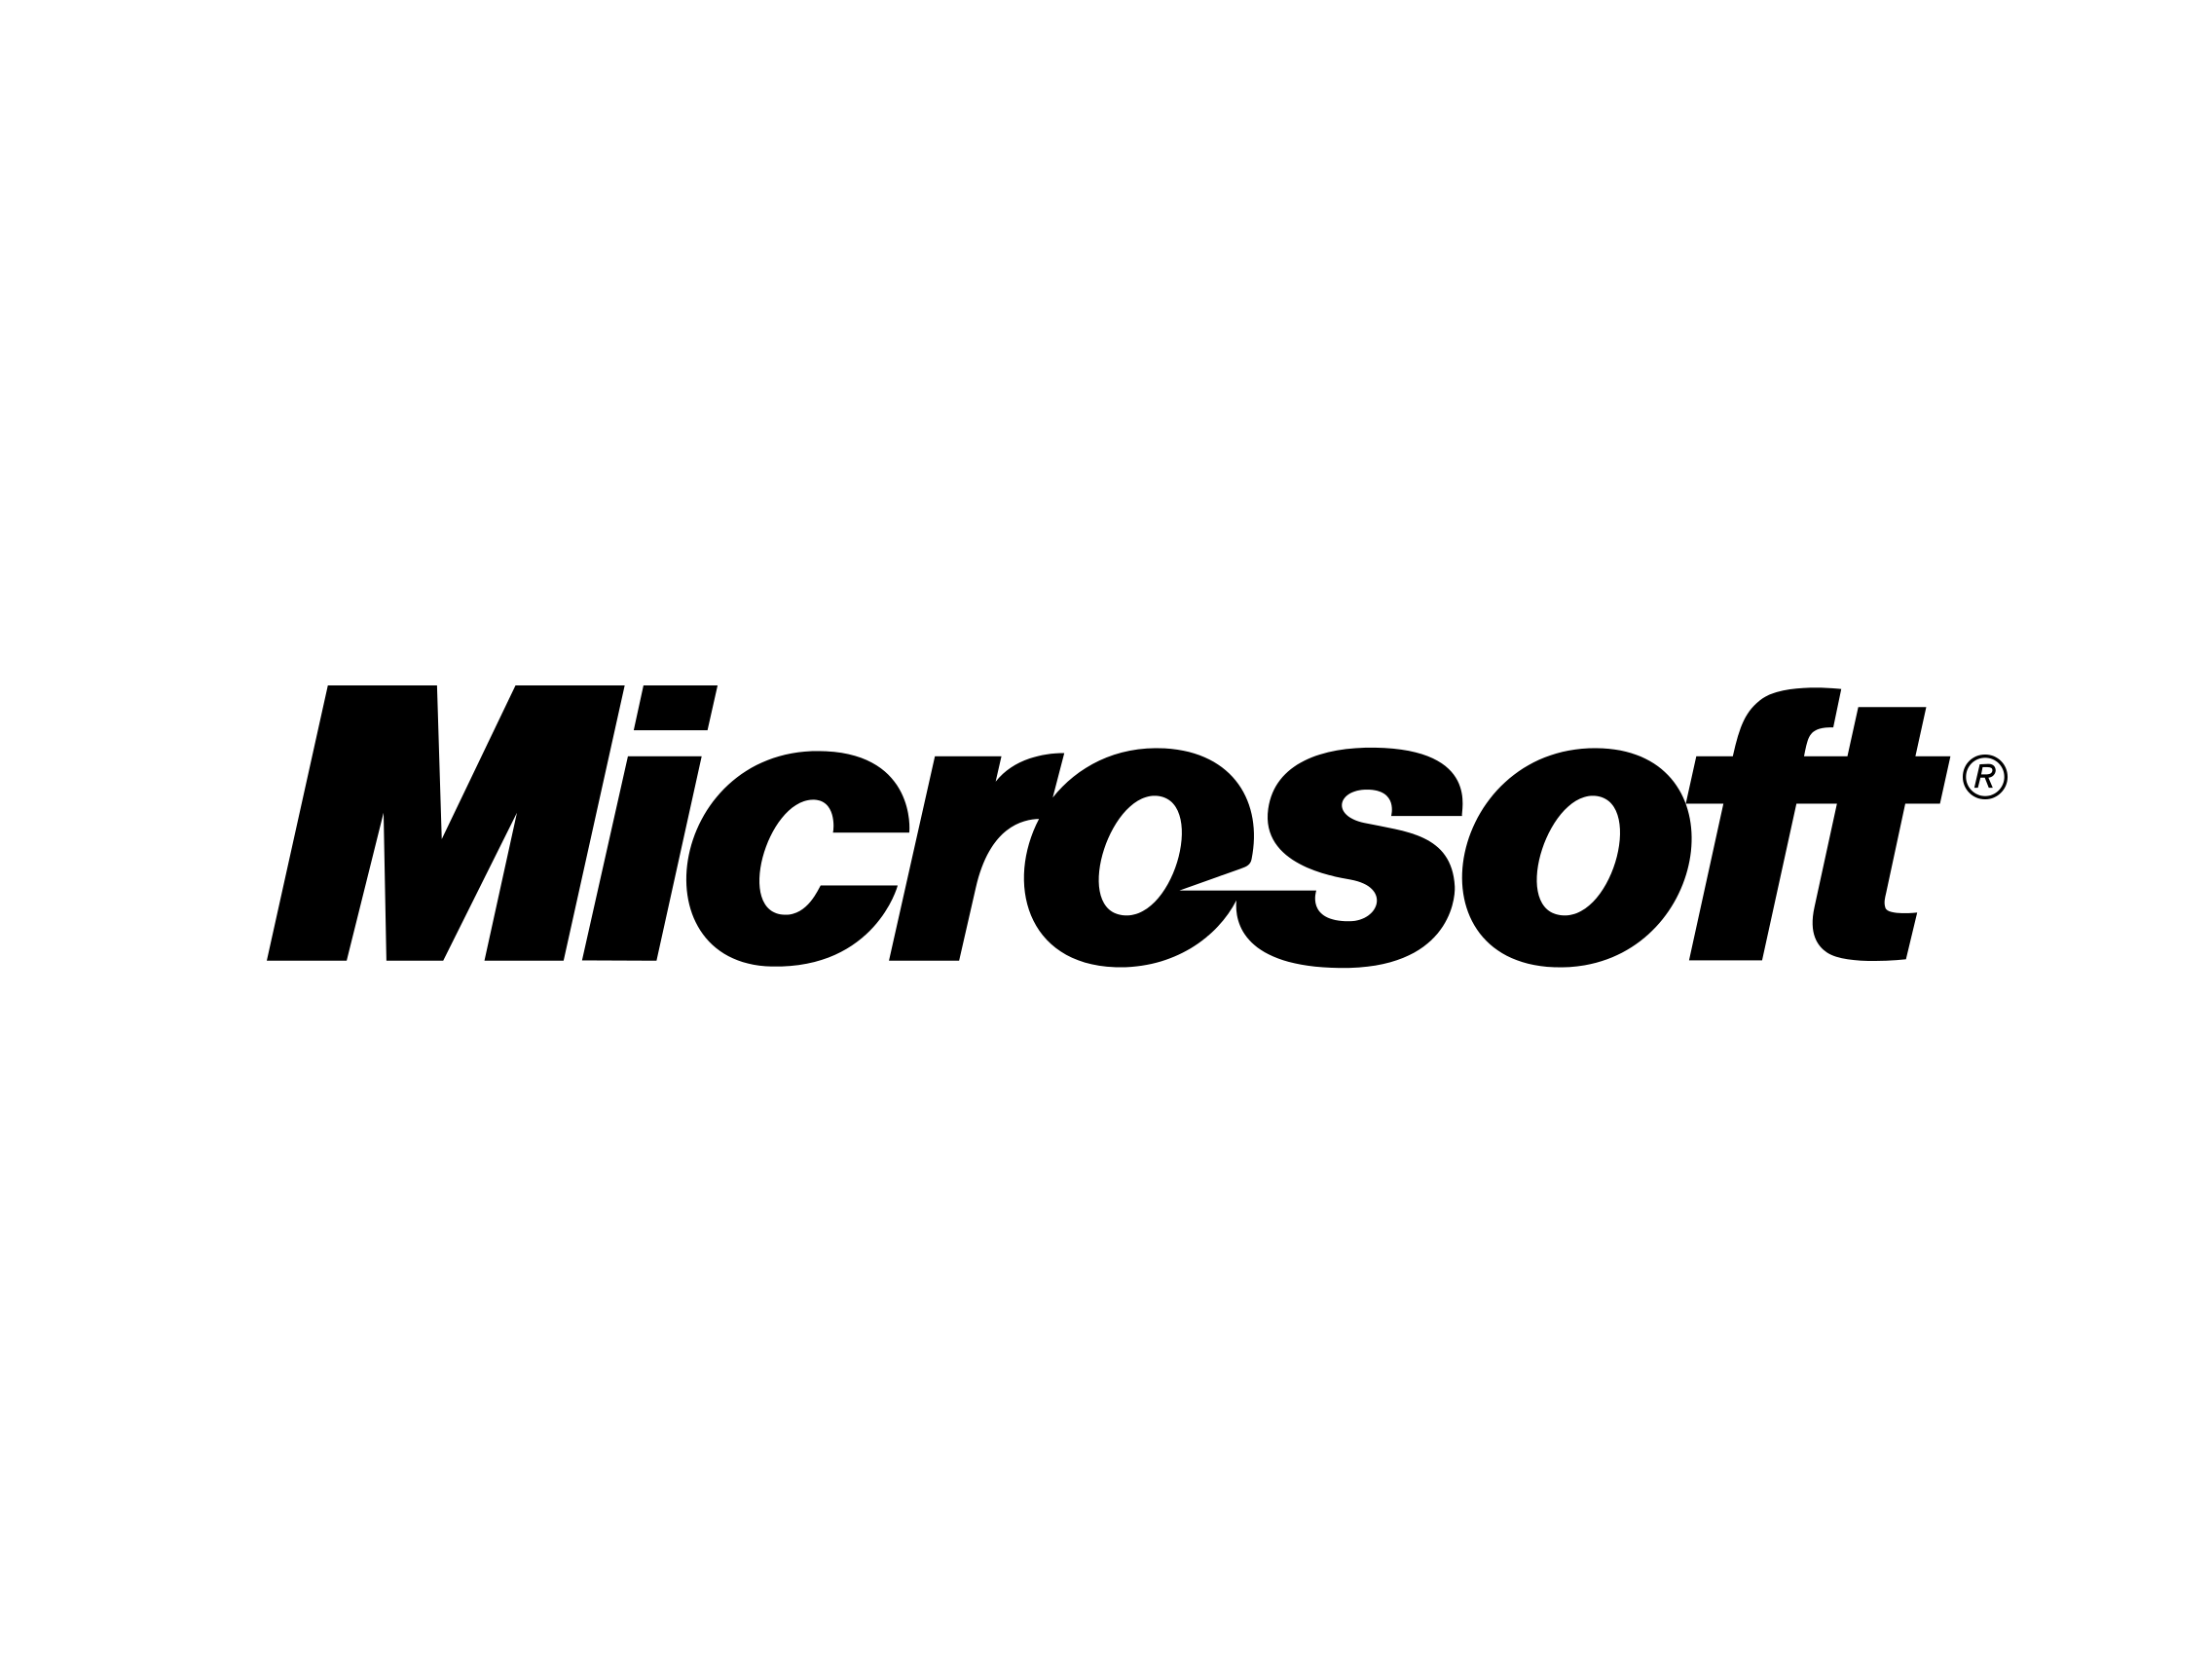 Current Microsoft Logo - Microsoft logo